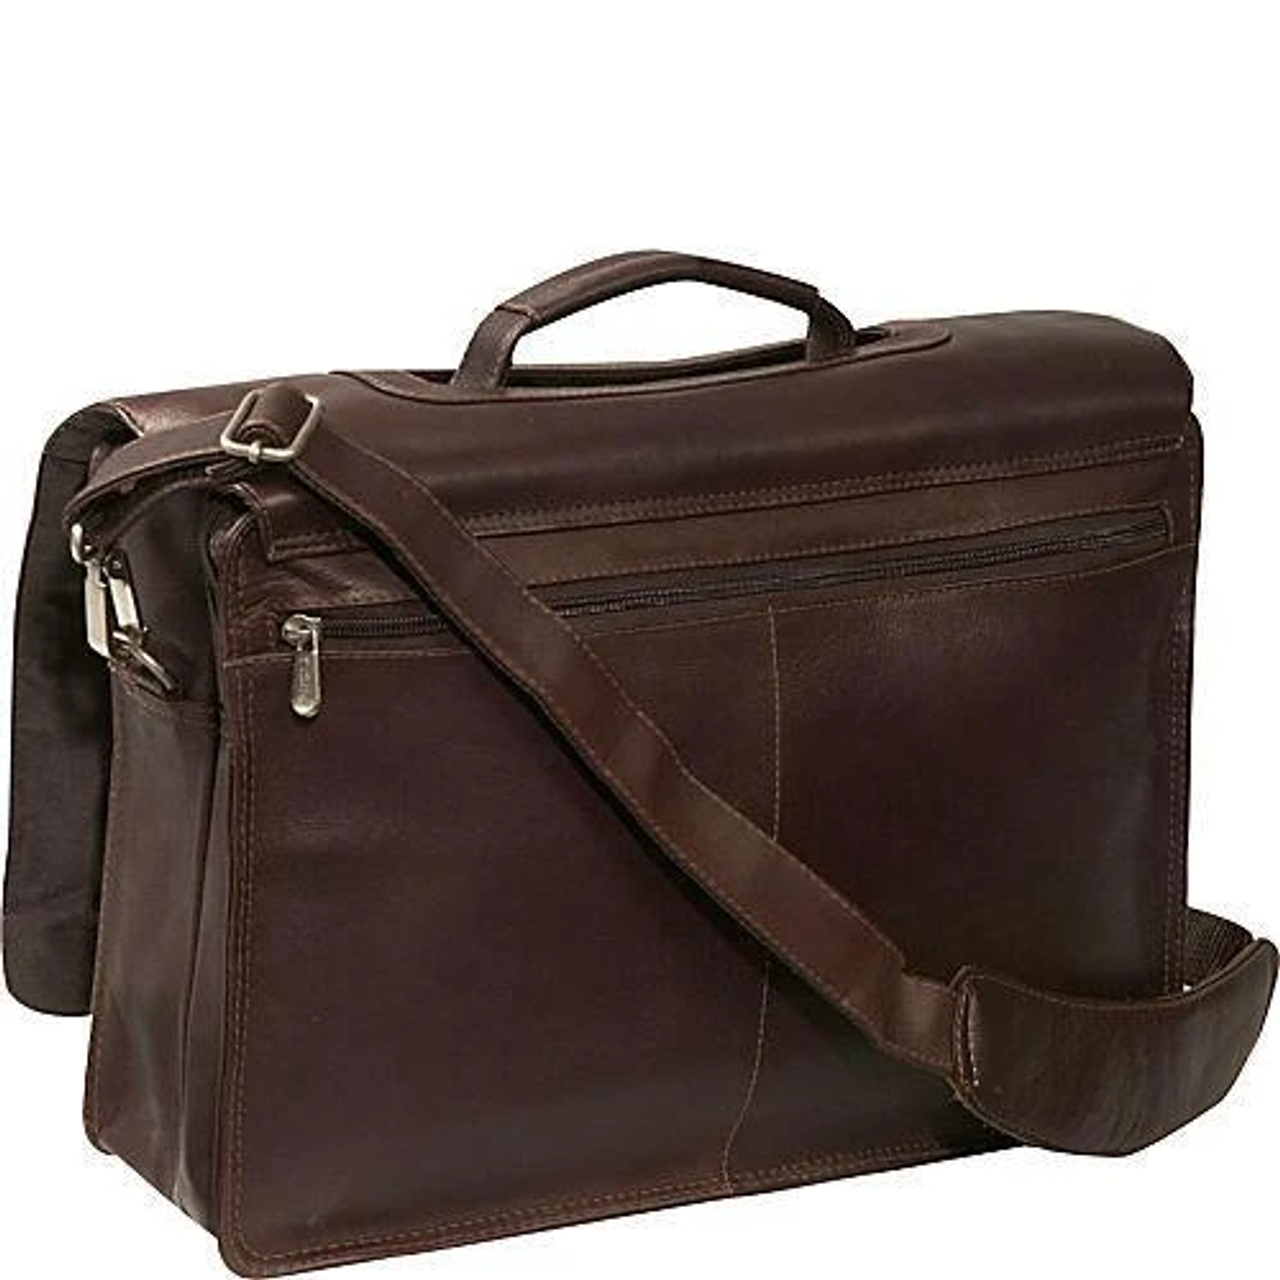 Executive Briefcase - Leather Loom